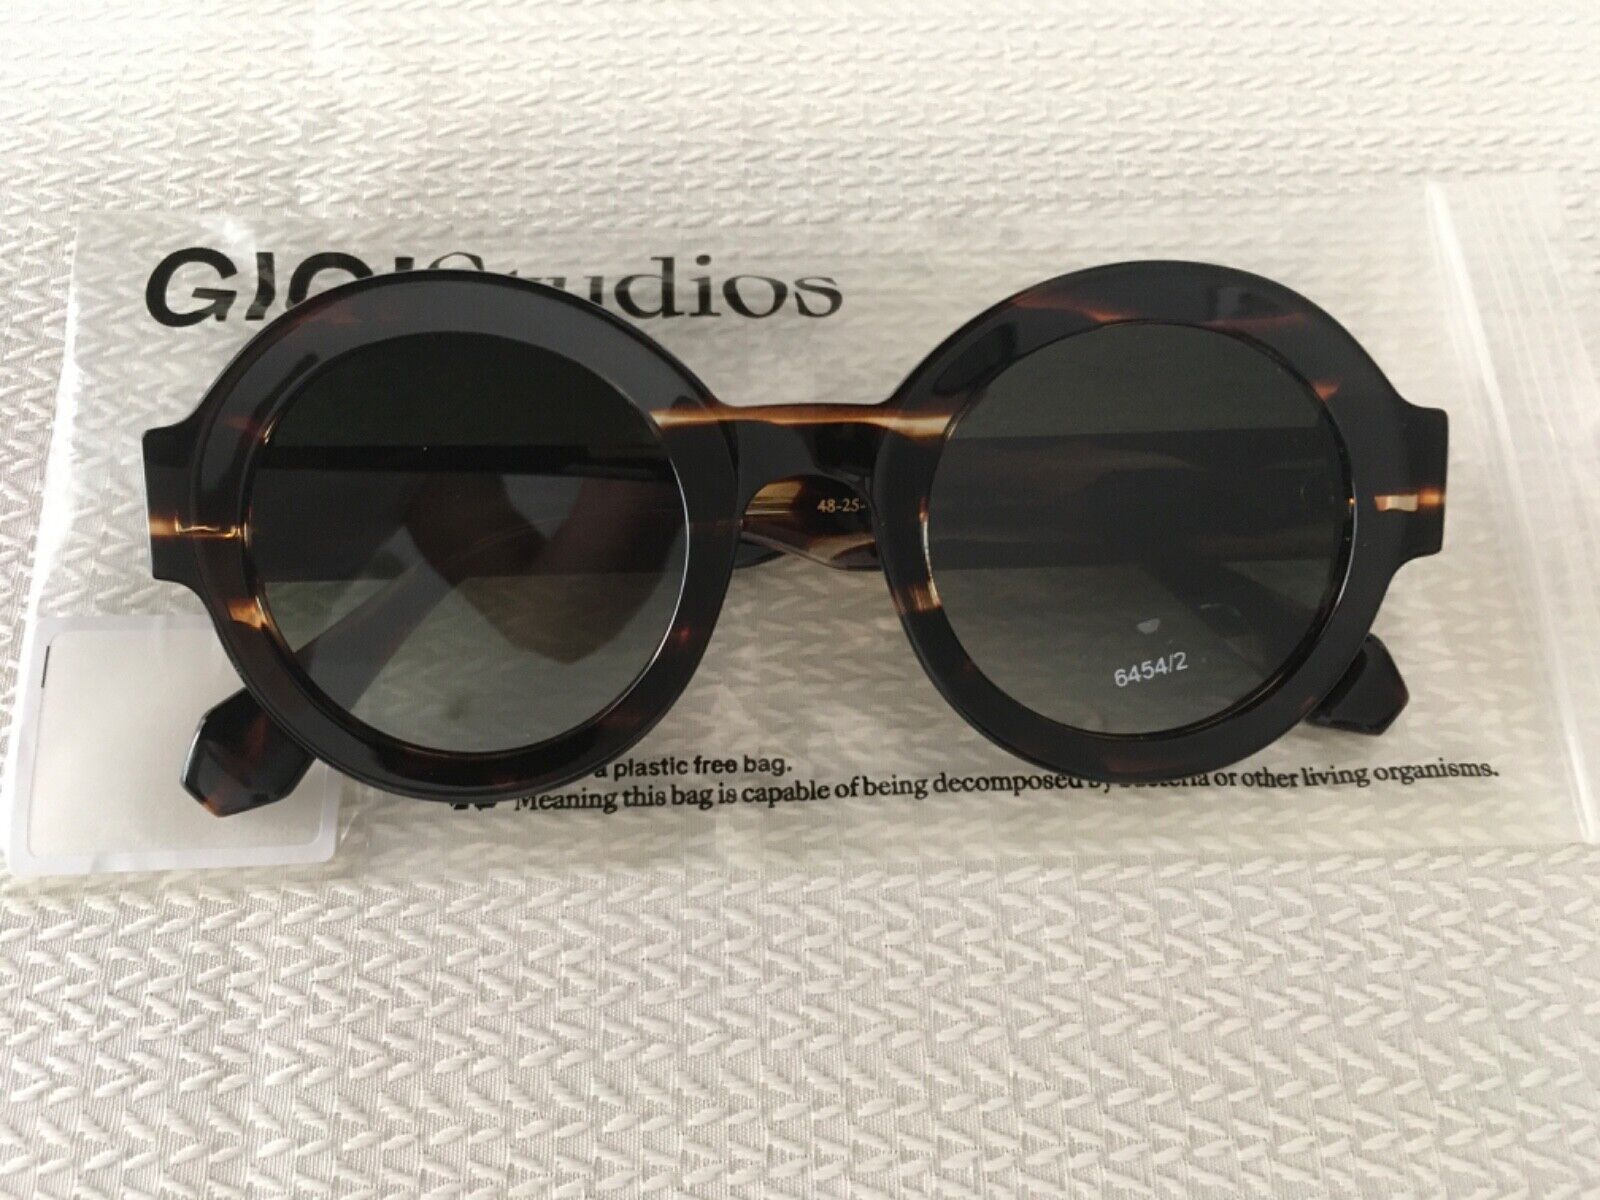 New Gigi Studios Sunglasses Laura